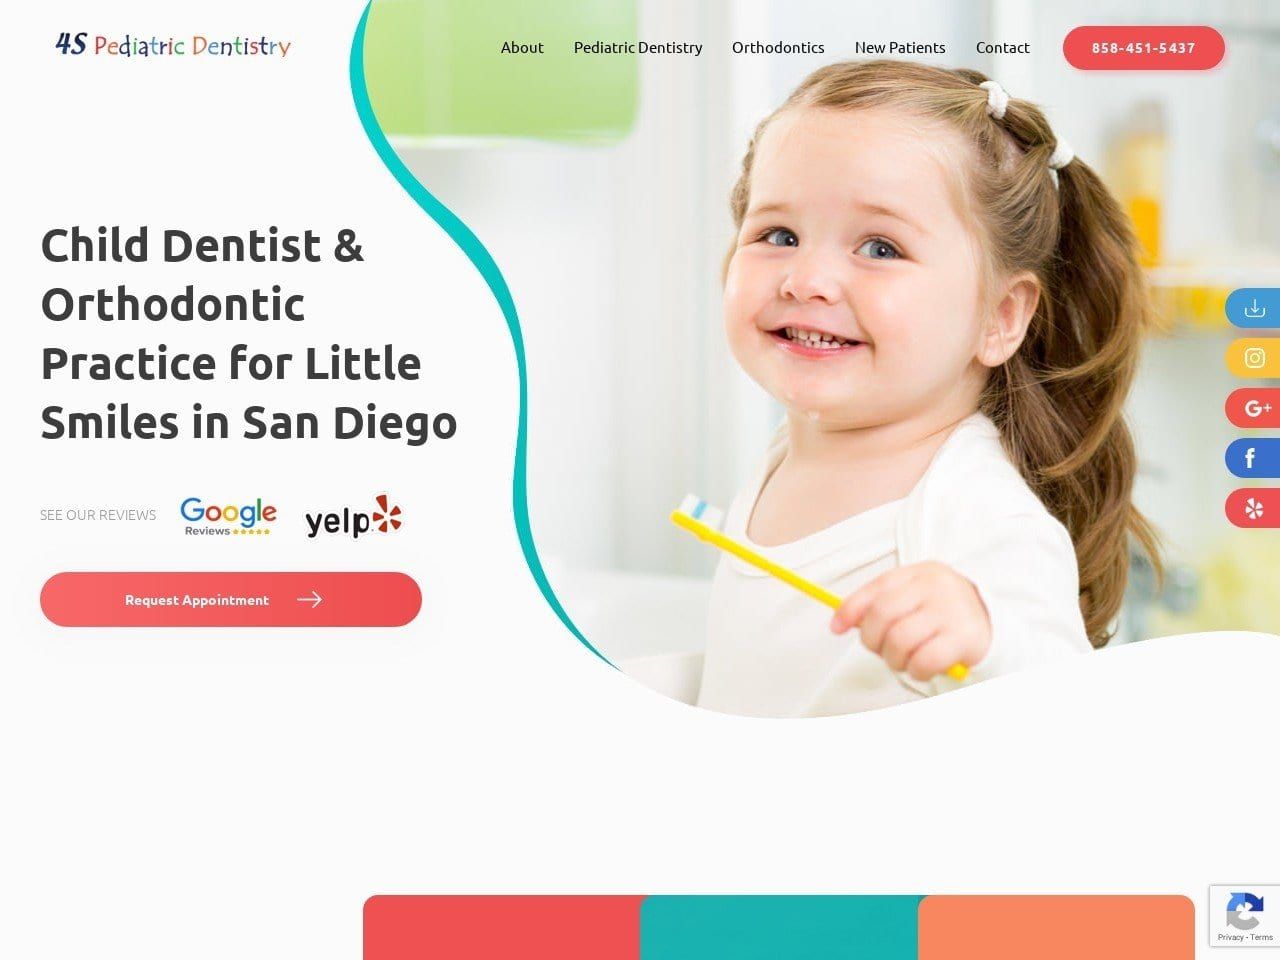 4S Pediatric Dentist Website Screenshot from 4spediatricdentistry.com